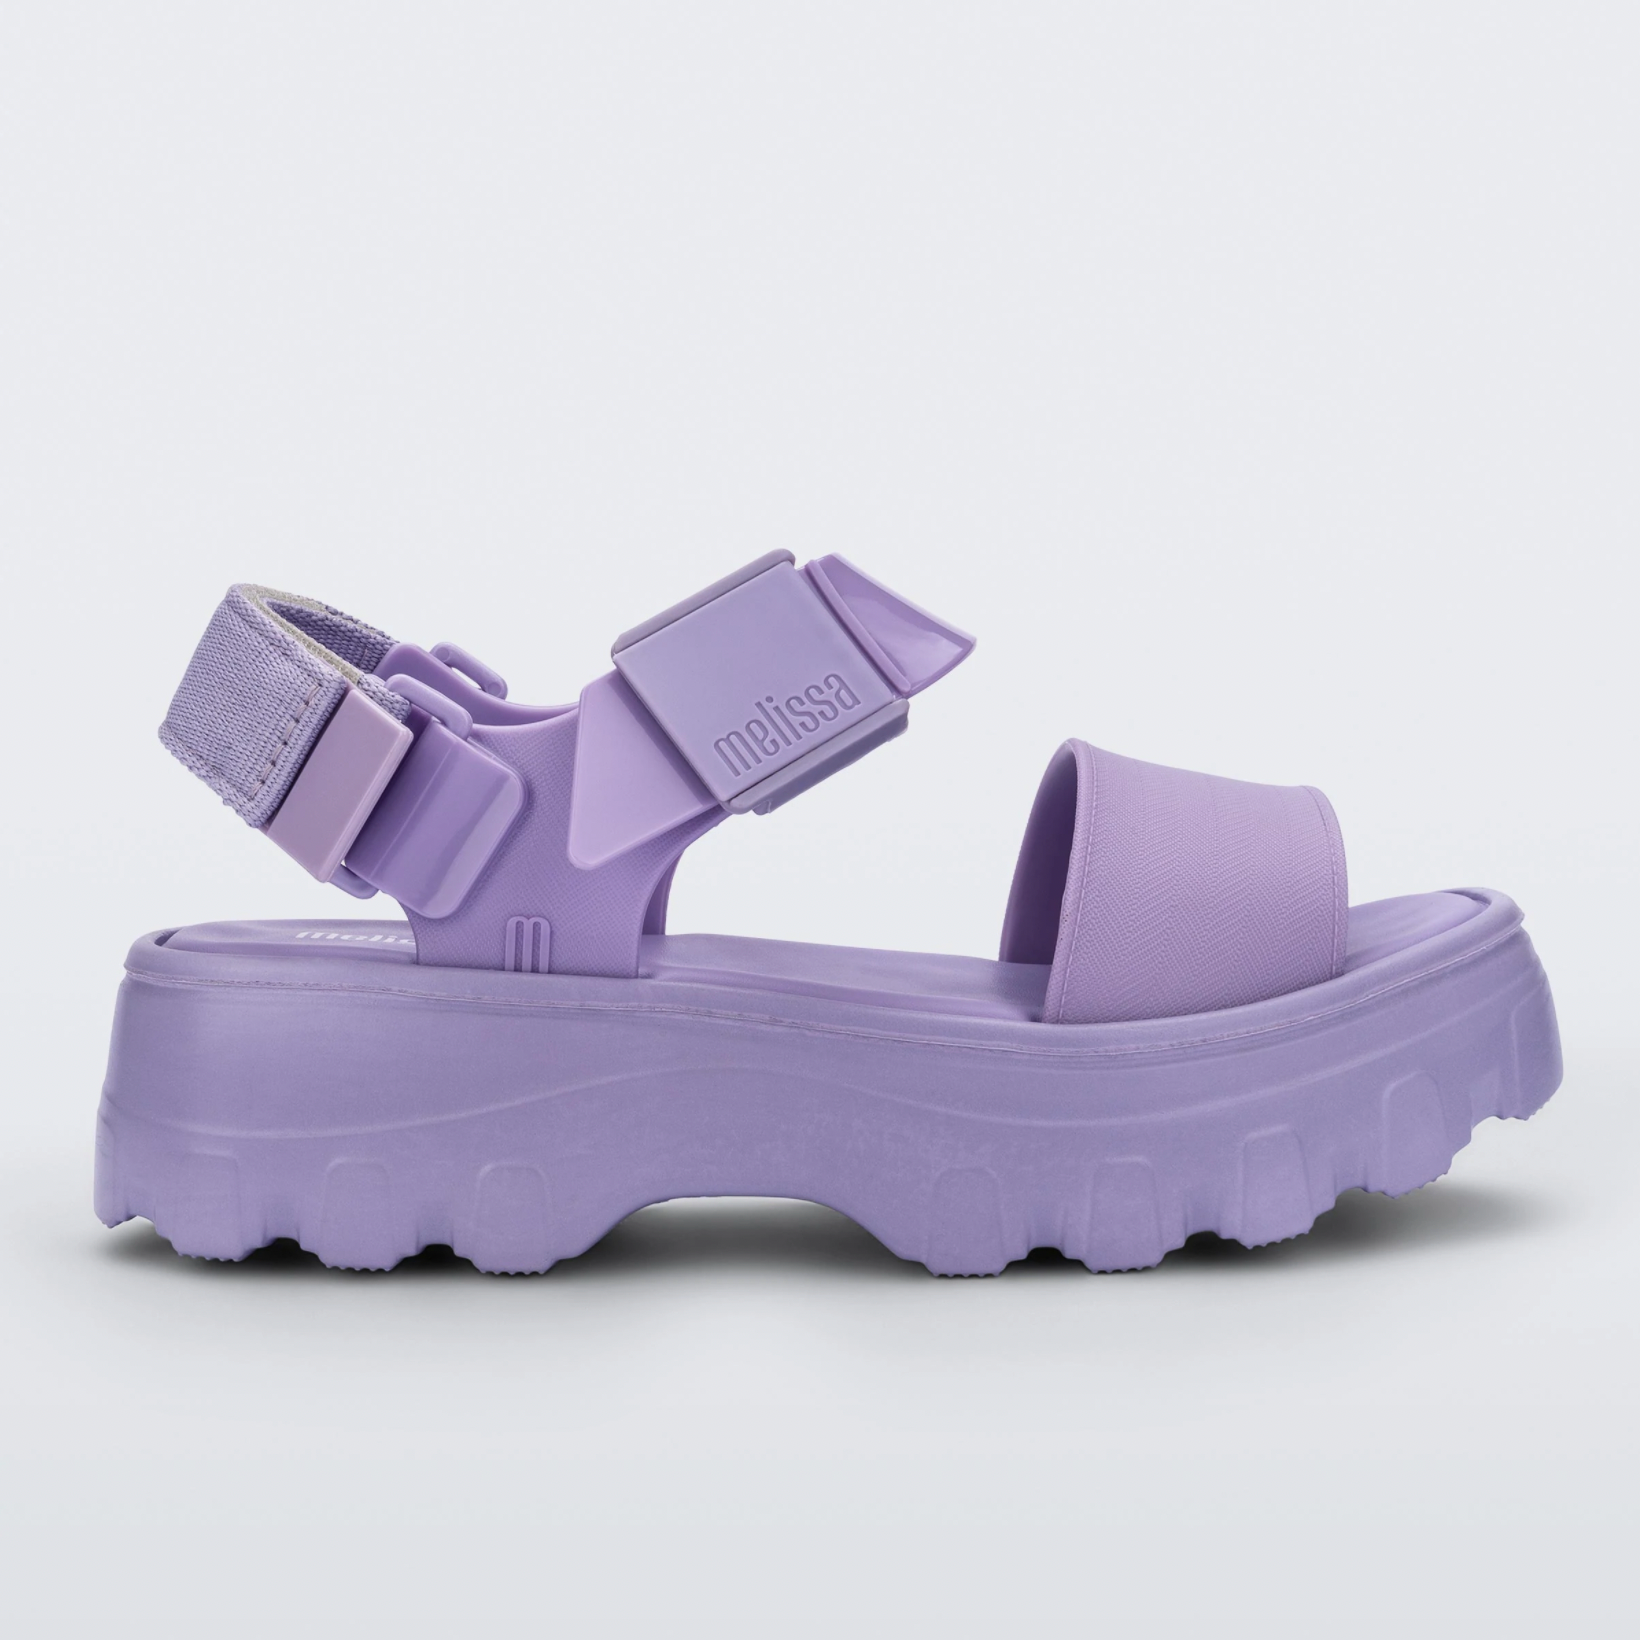 Petite Jolie Strappy Upper Sandals - Lavender/Purple